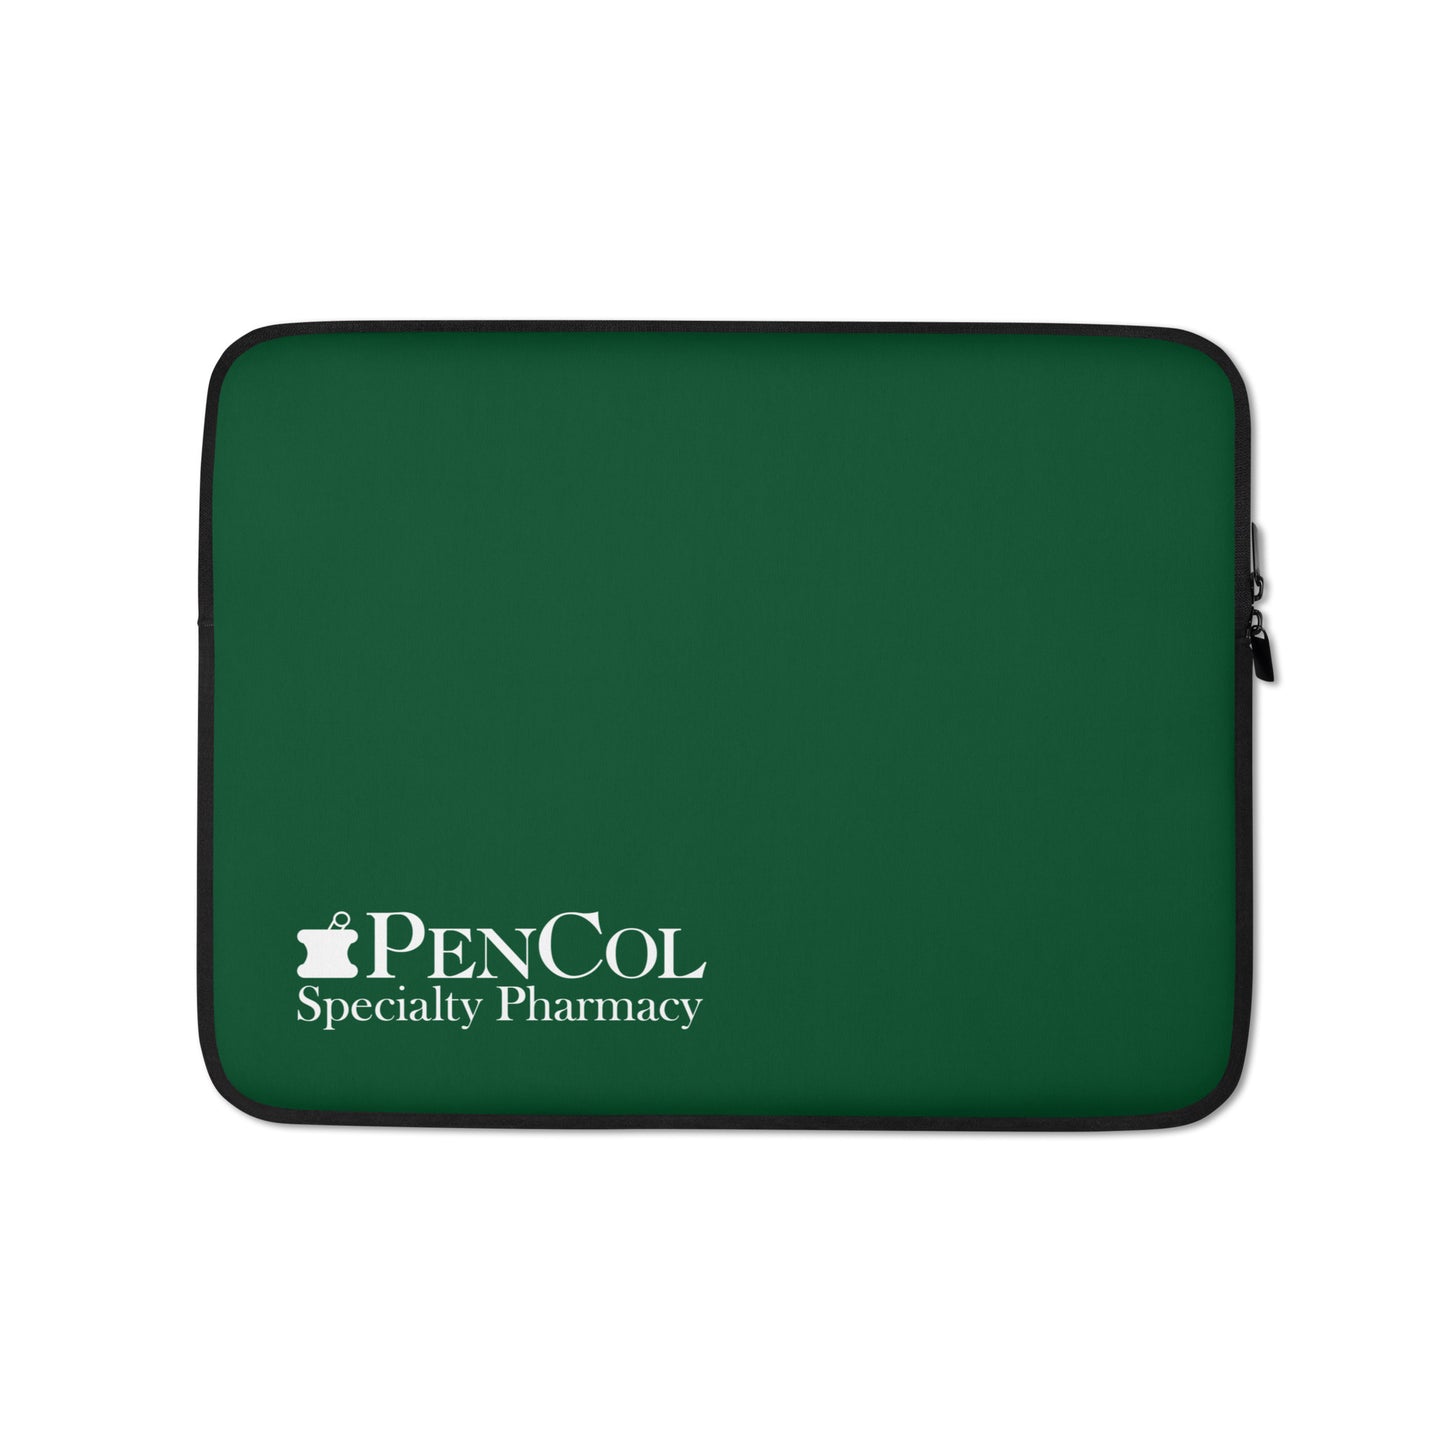 Laptop Sleeve - Pencol Pharmacy